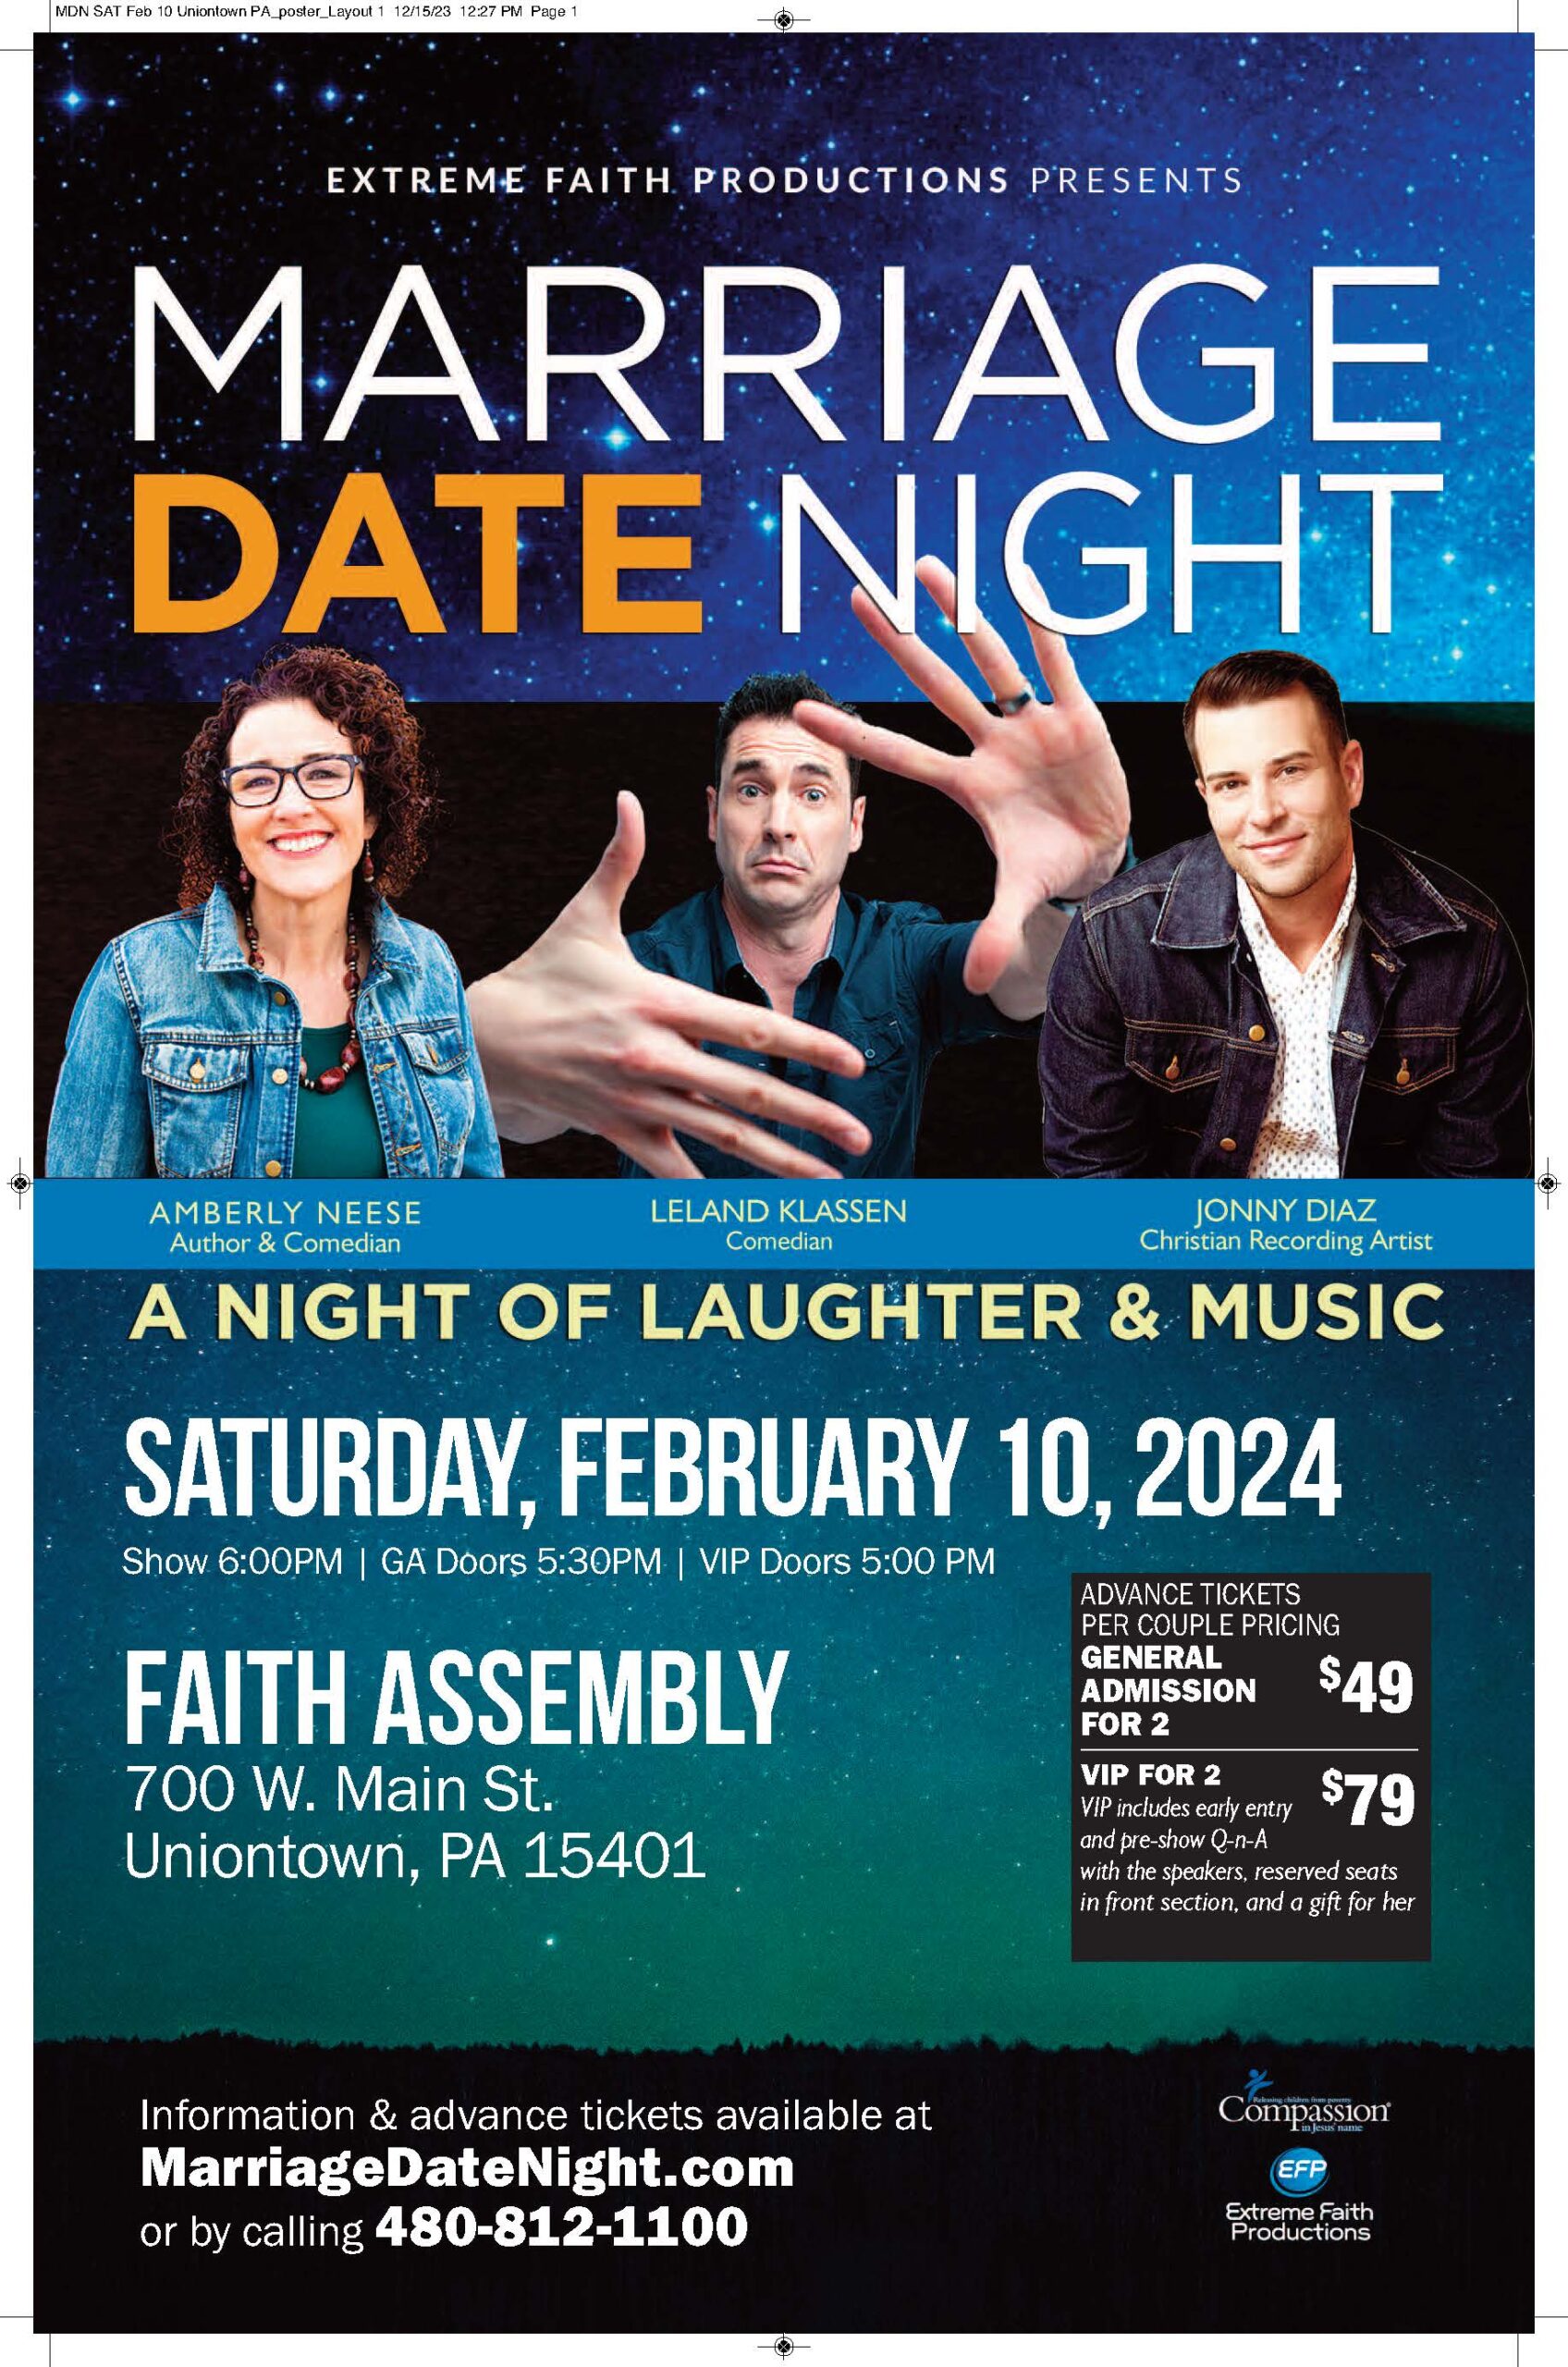 MDN SAT Feb 10 Uniontown PA_poster (1)